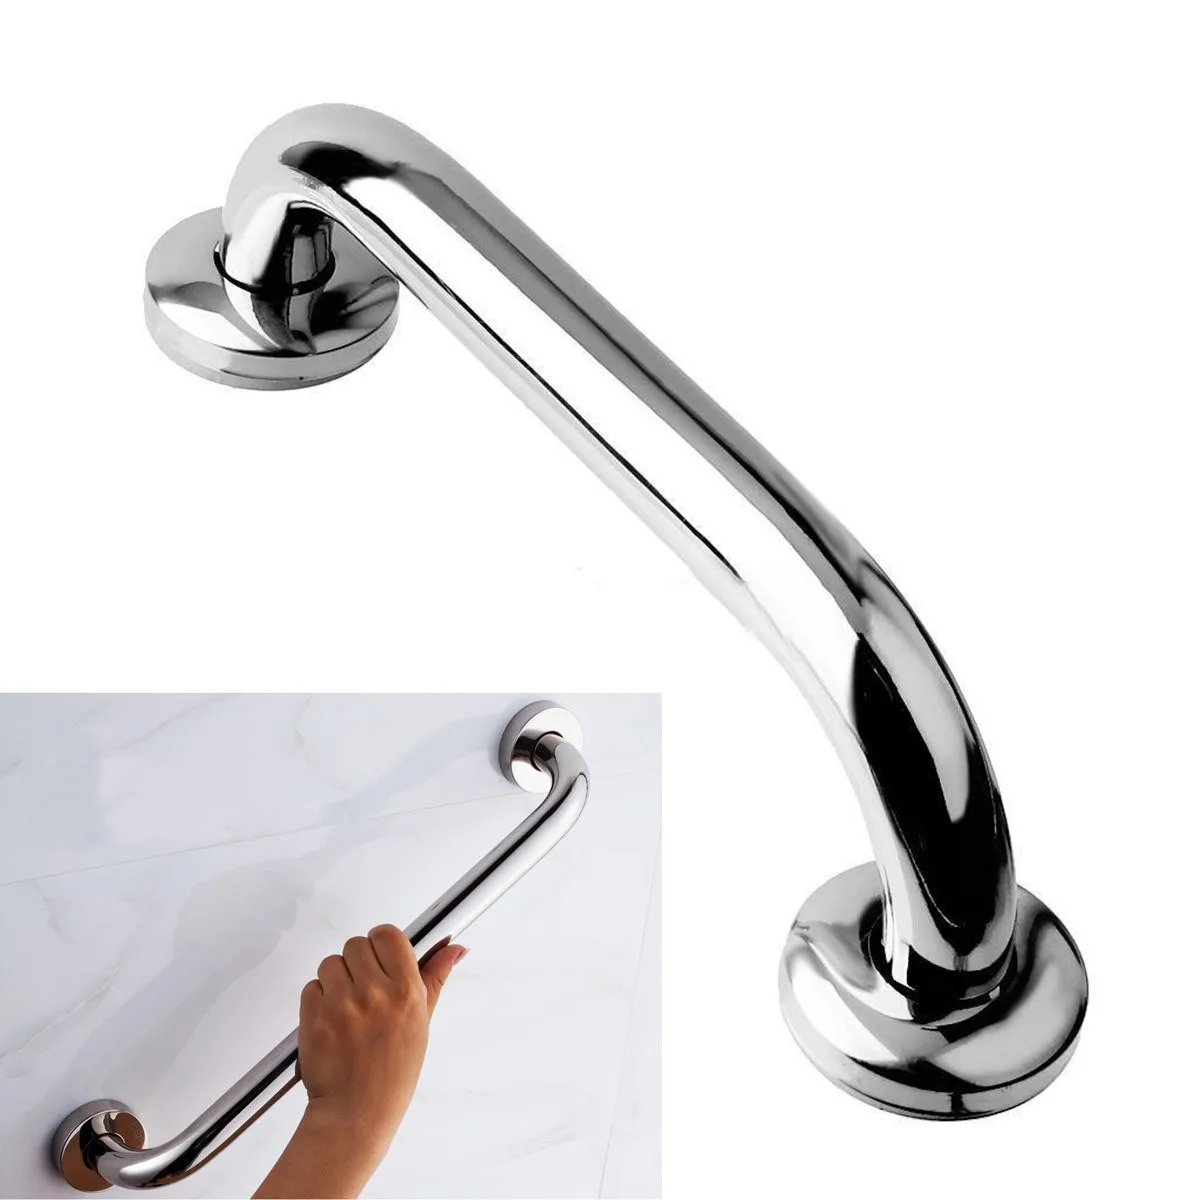 

25cm Stainless Steel Bathroom Tub Handrail Grab Bar Shower Grip Safety Handle Towel Rack Handle Hel for Elderly Hot Sale